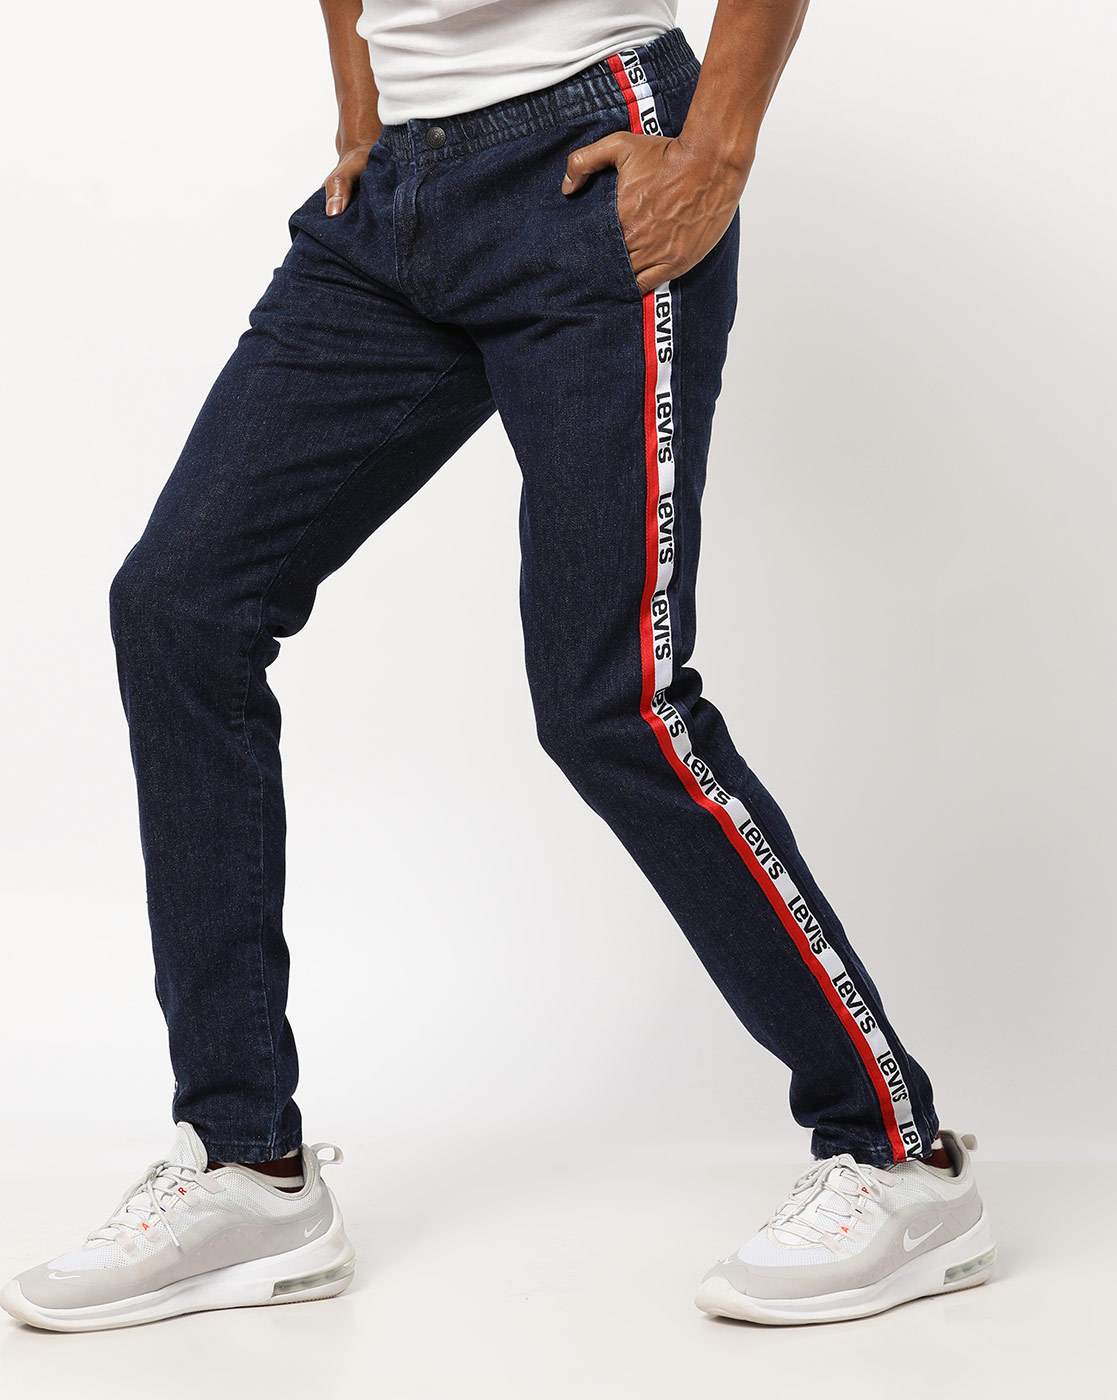 Ripped Jeans Grey Side Striped Denim Jeans for Men Online  Powerlook